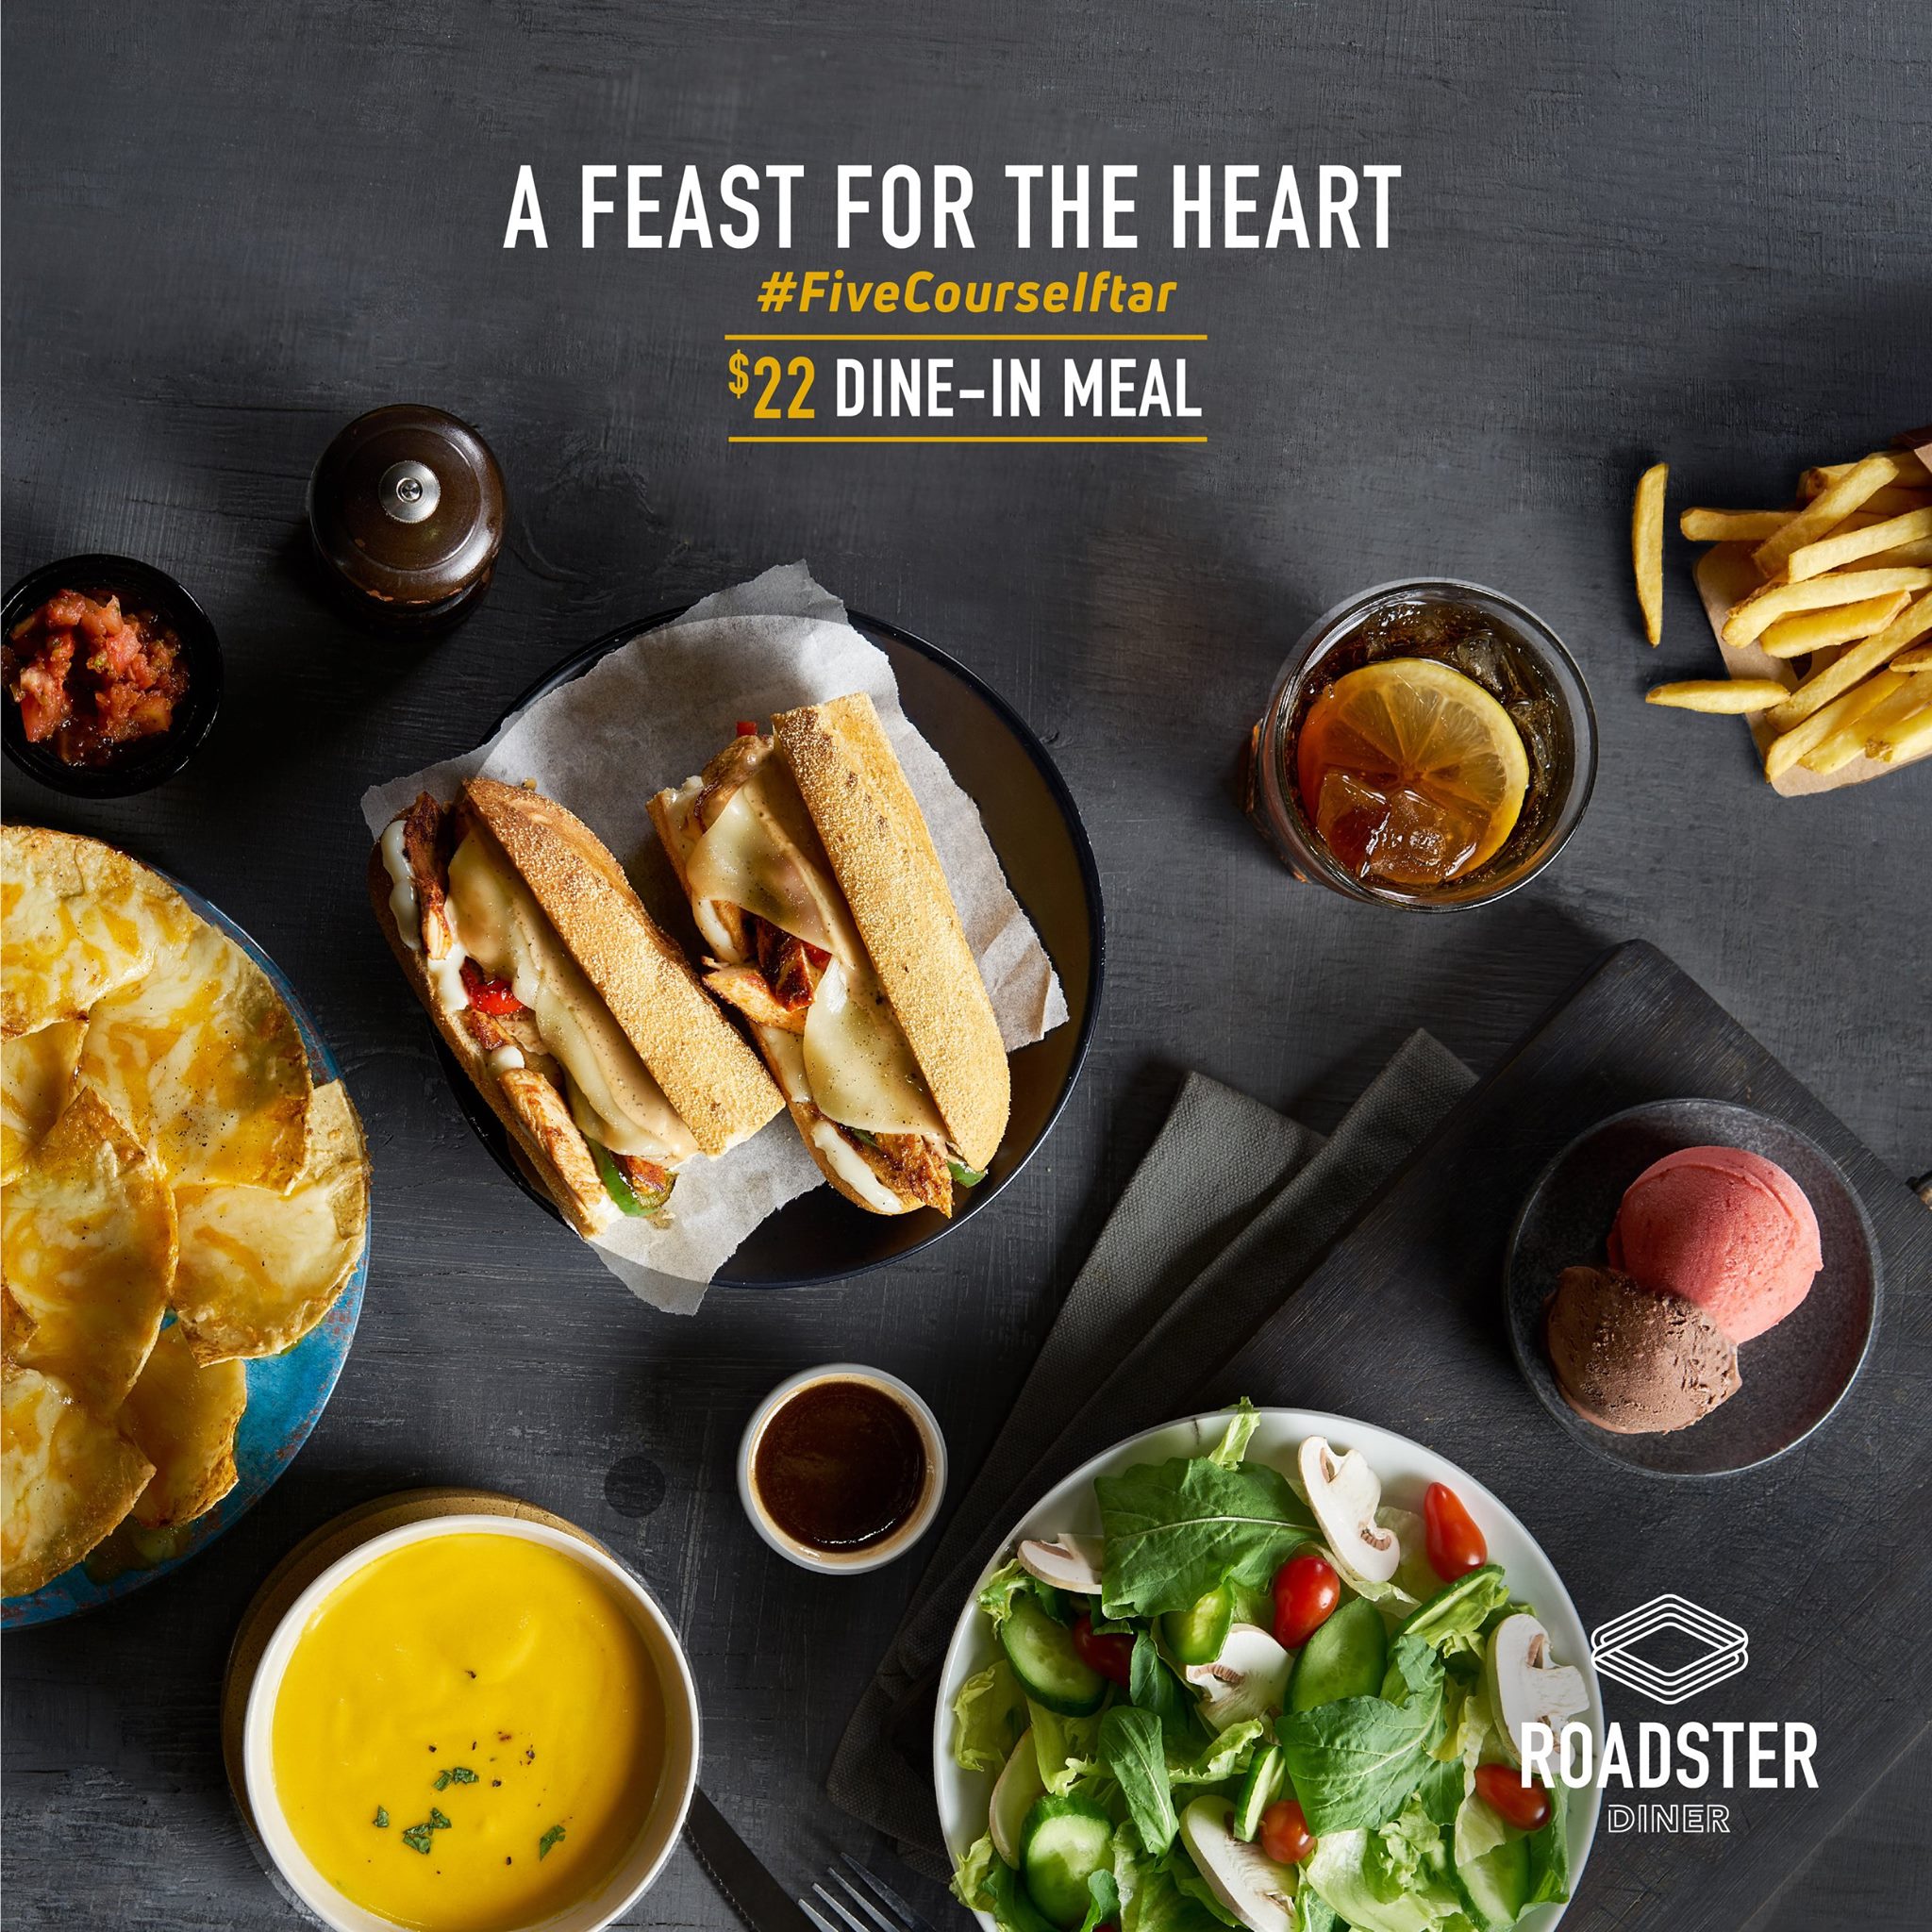 Roadster diner sandwich menu food styling by Butter & Basil